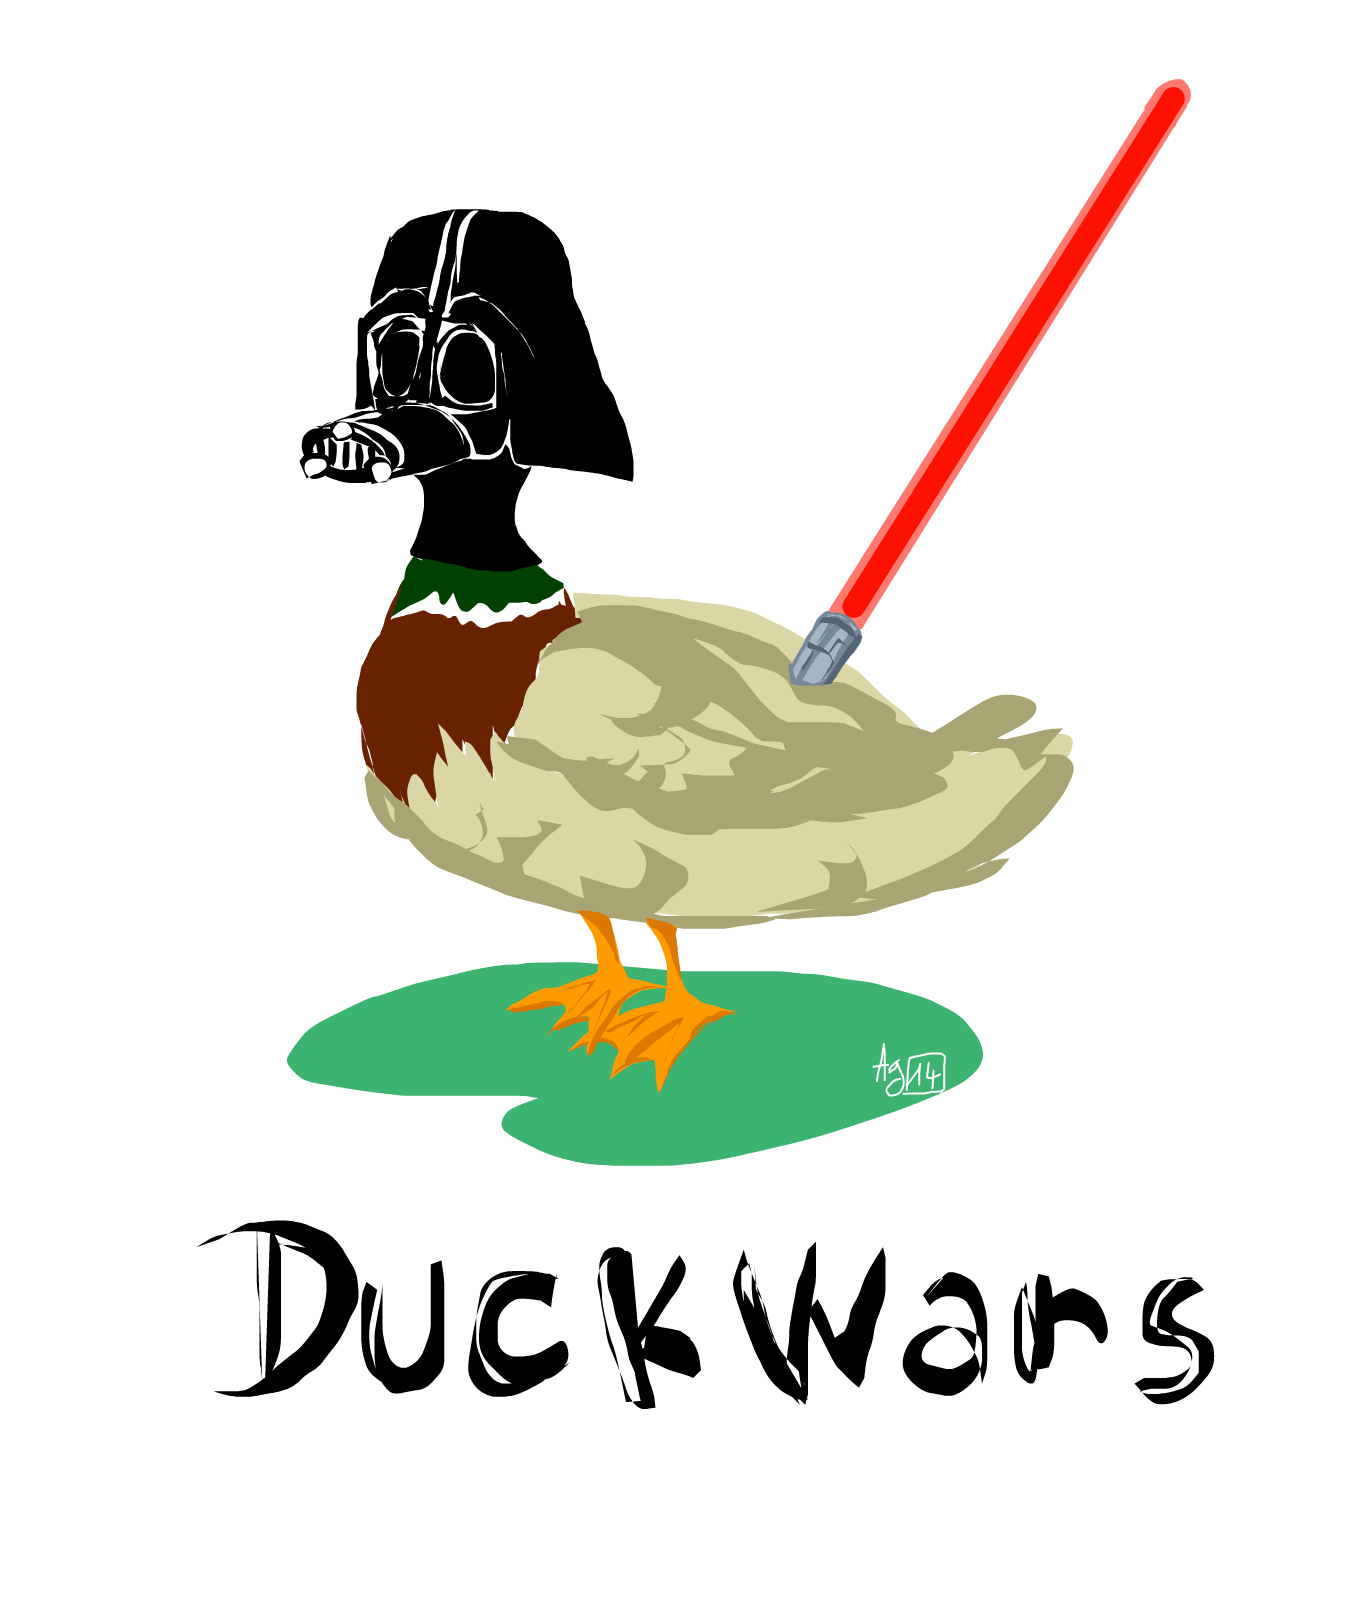 Duck wars